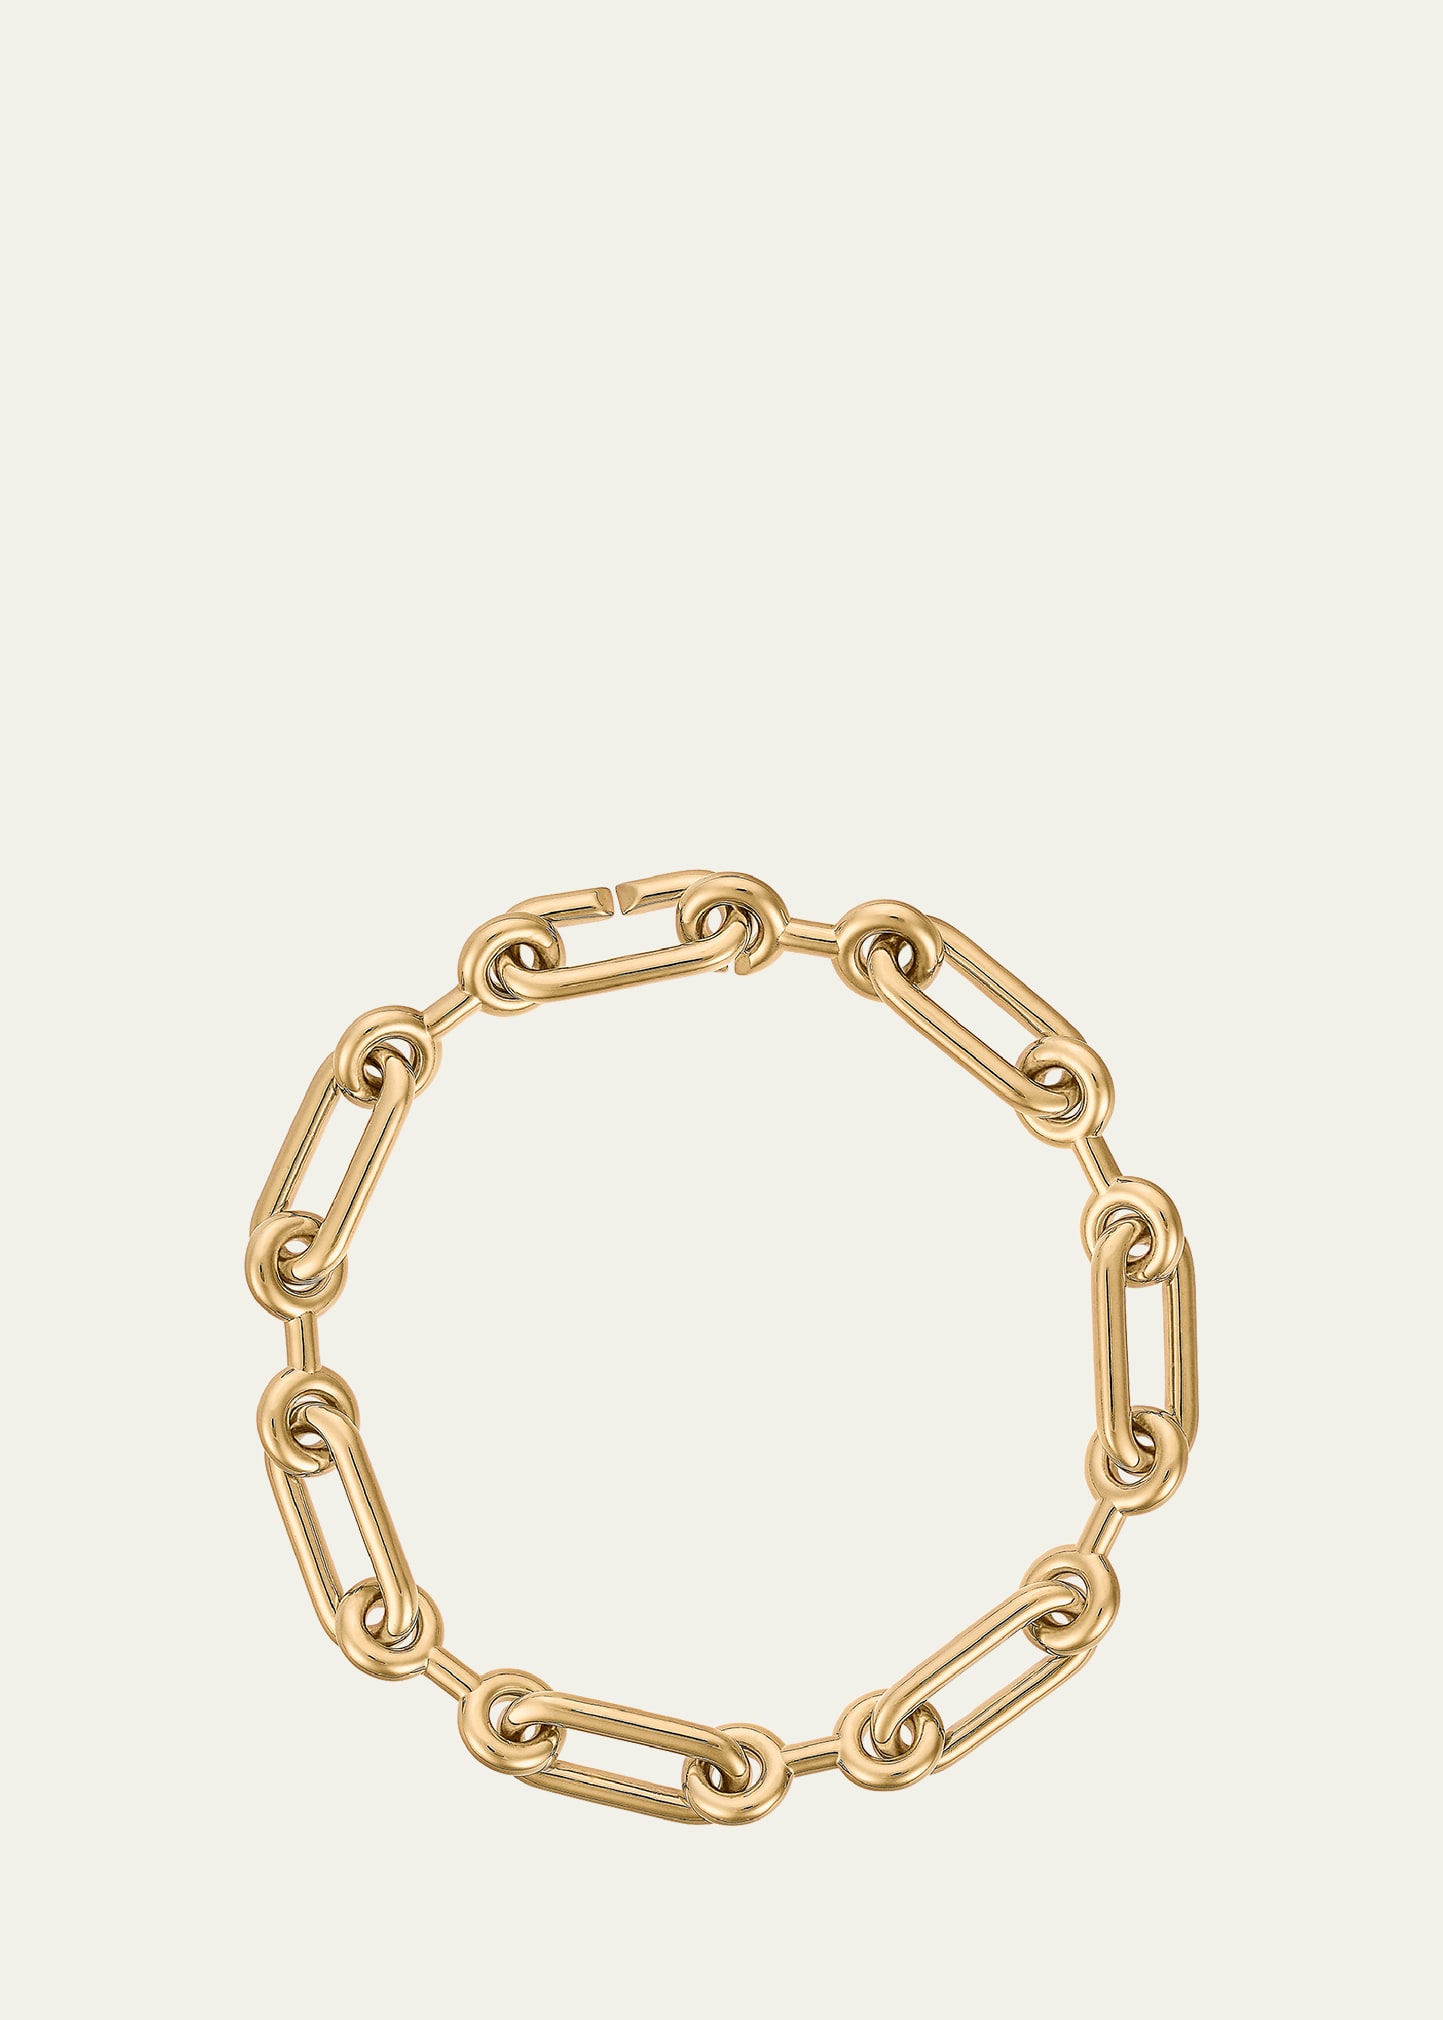 Petite Binary Chain Bracelet in Gold Vermeil